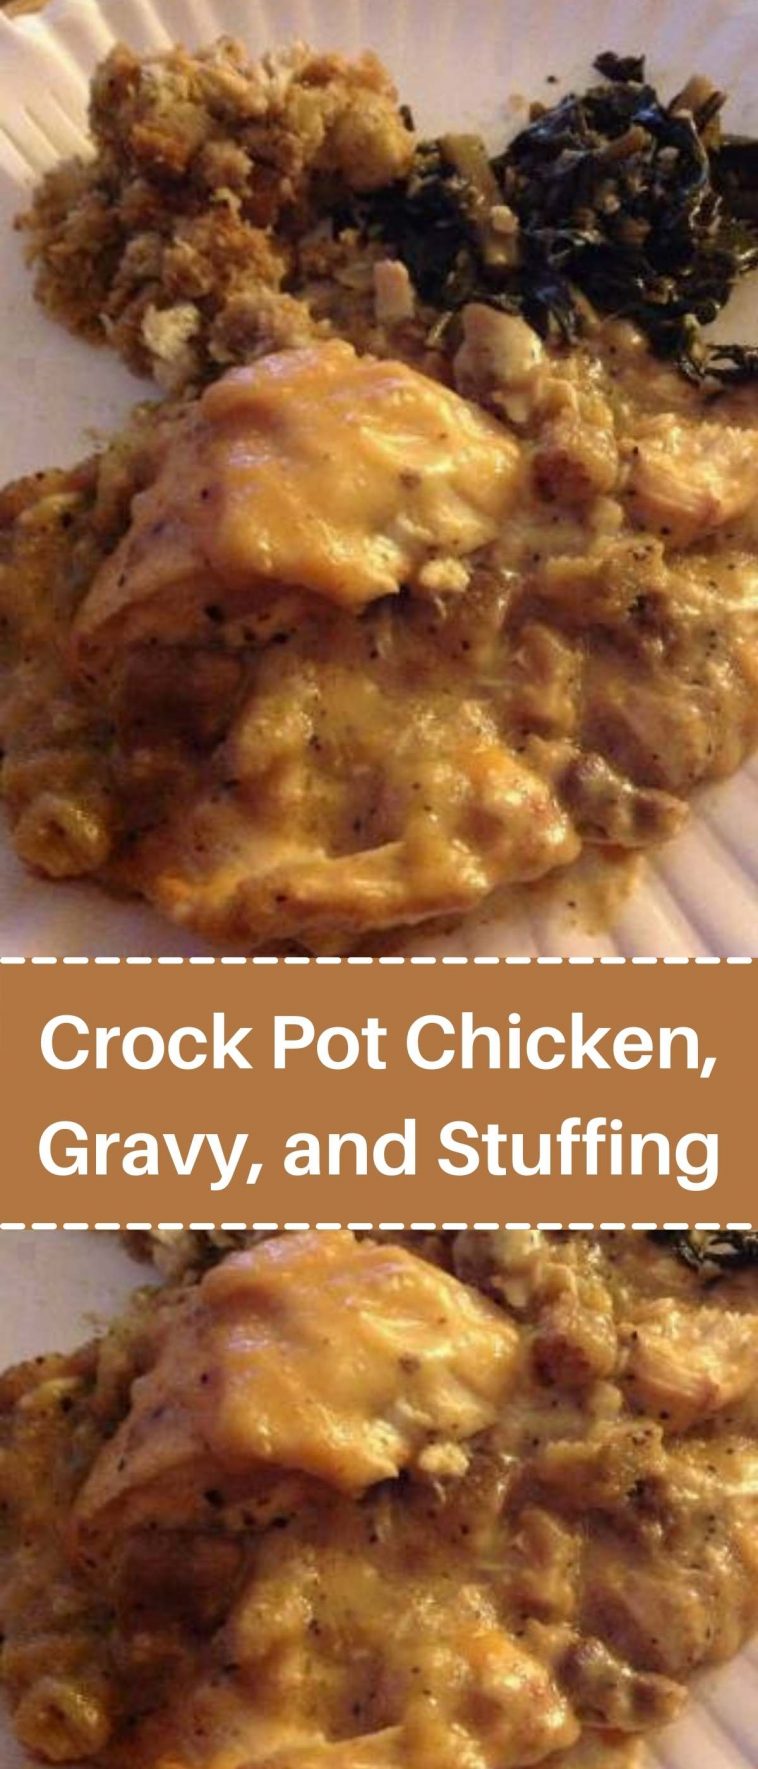 Crock Pot Chicken, Gravy, and Stuffing